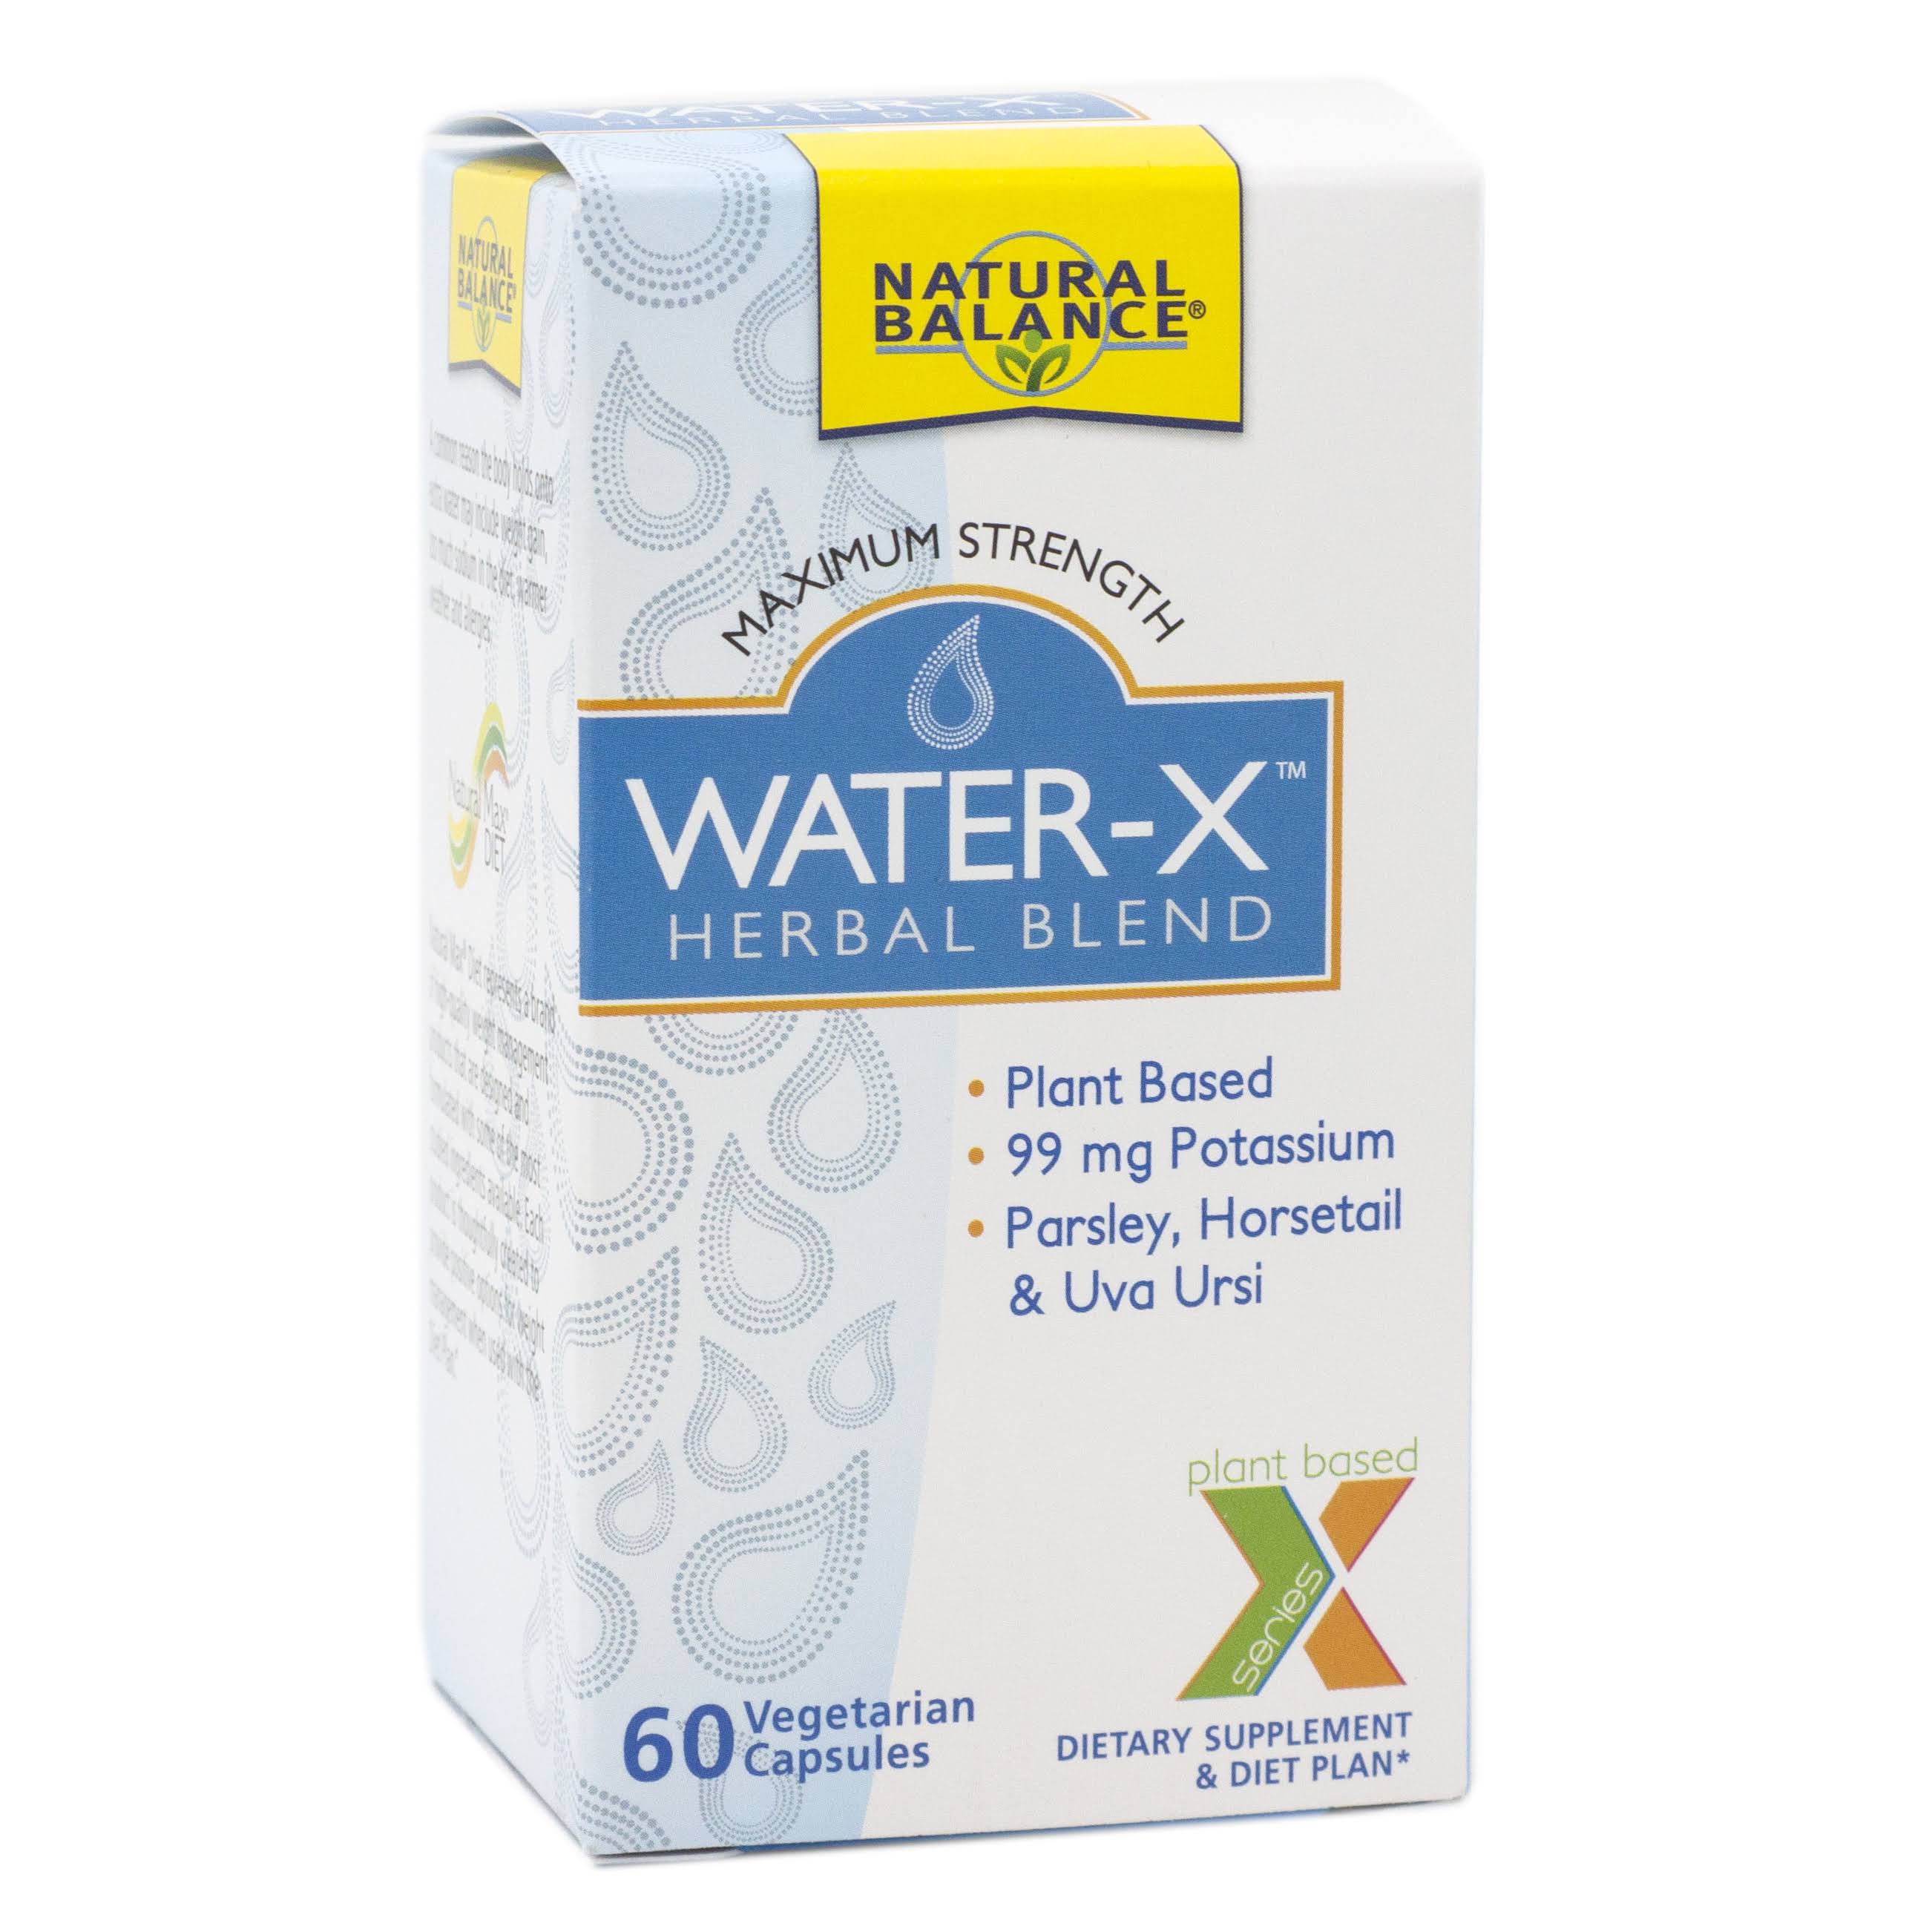 Natural Balance Water-X Herbal Blend Maximum Strength Supplement - 60 Vegetarian Capsules